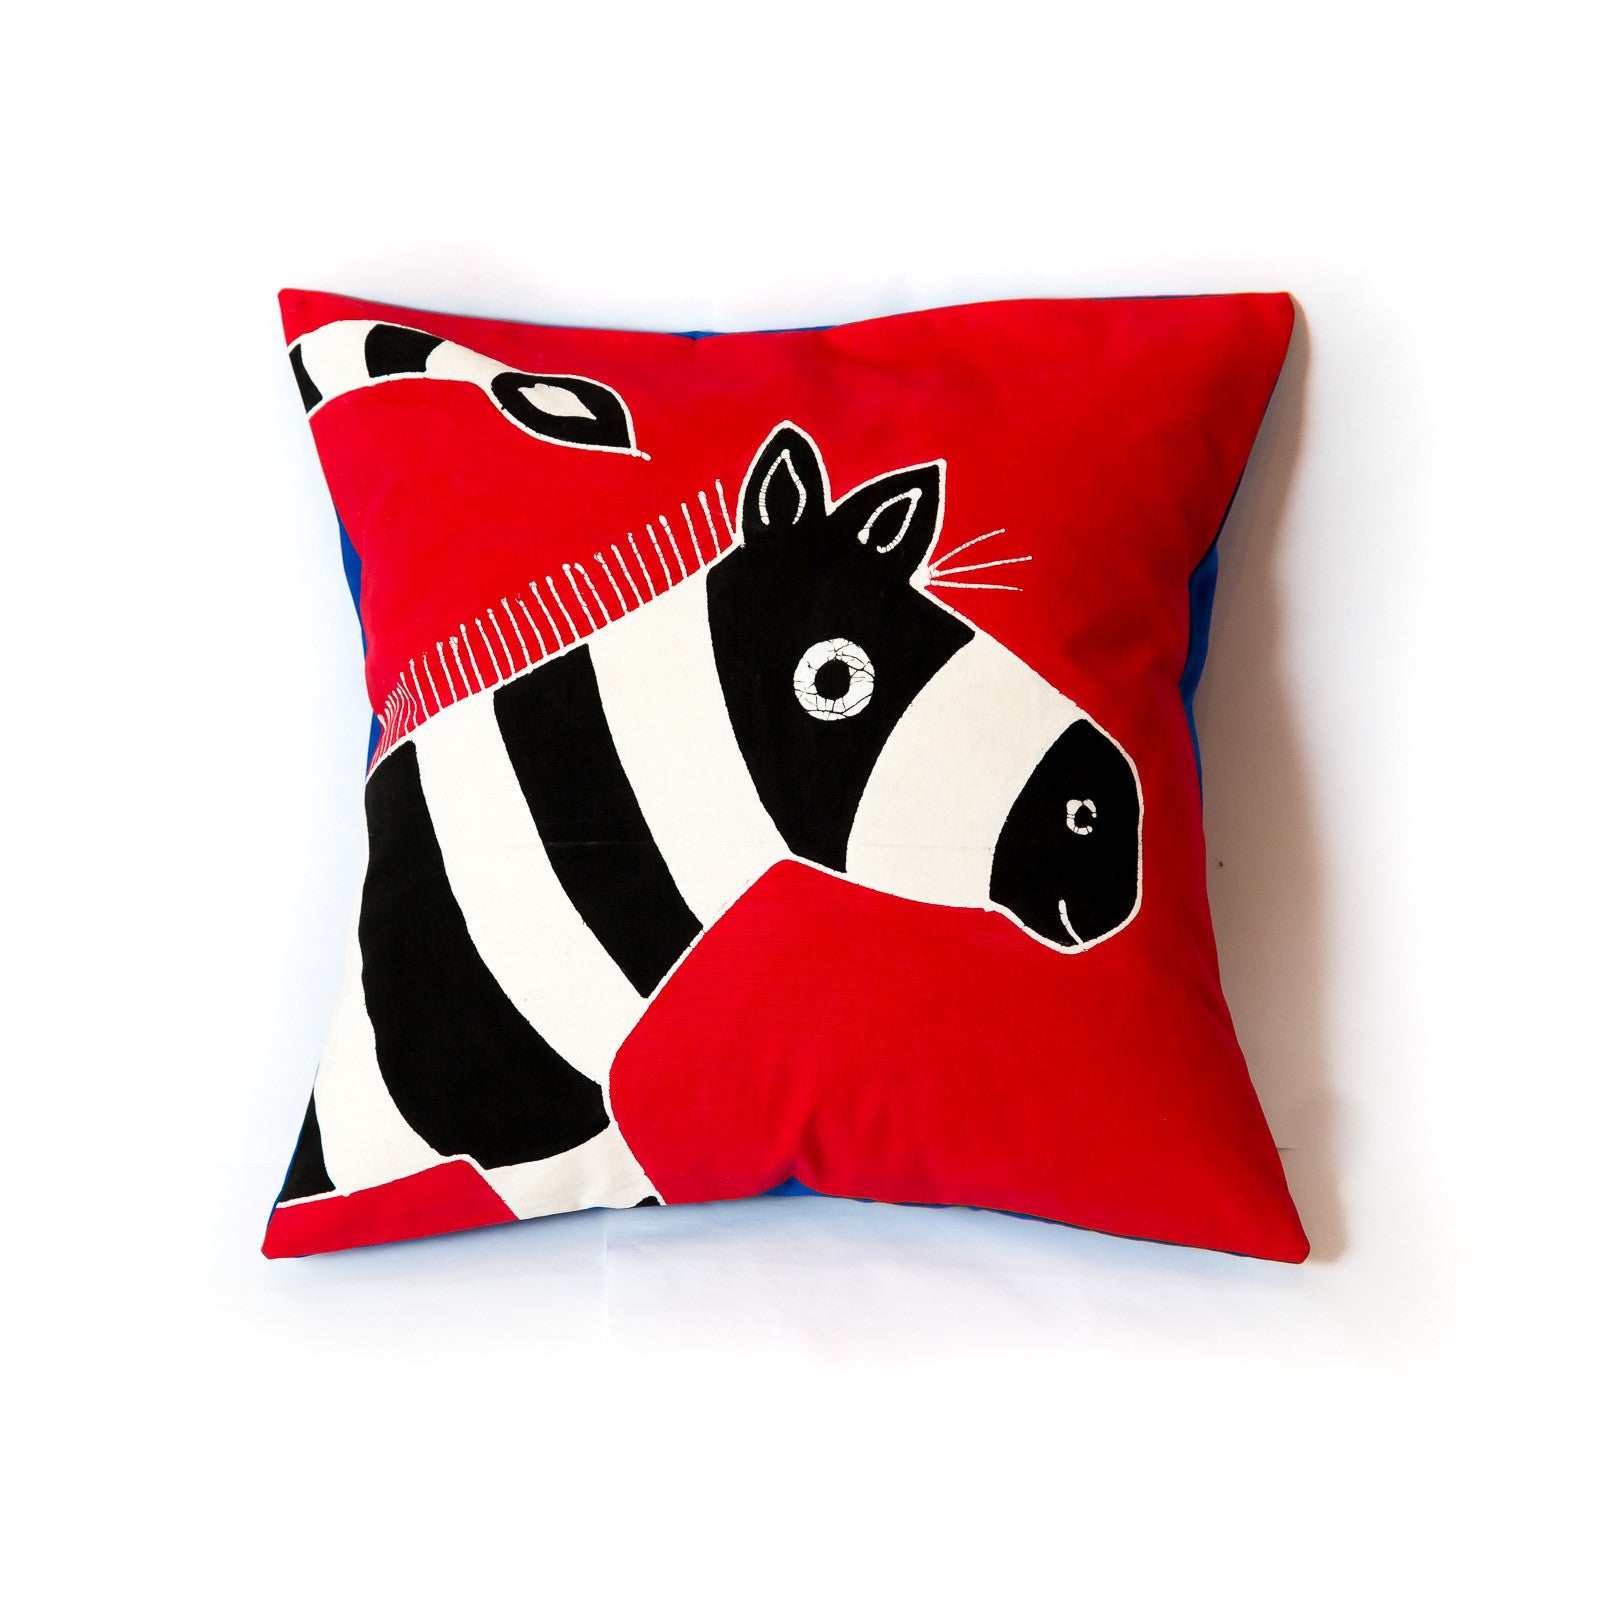 Zebra cushion cover for kids